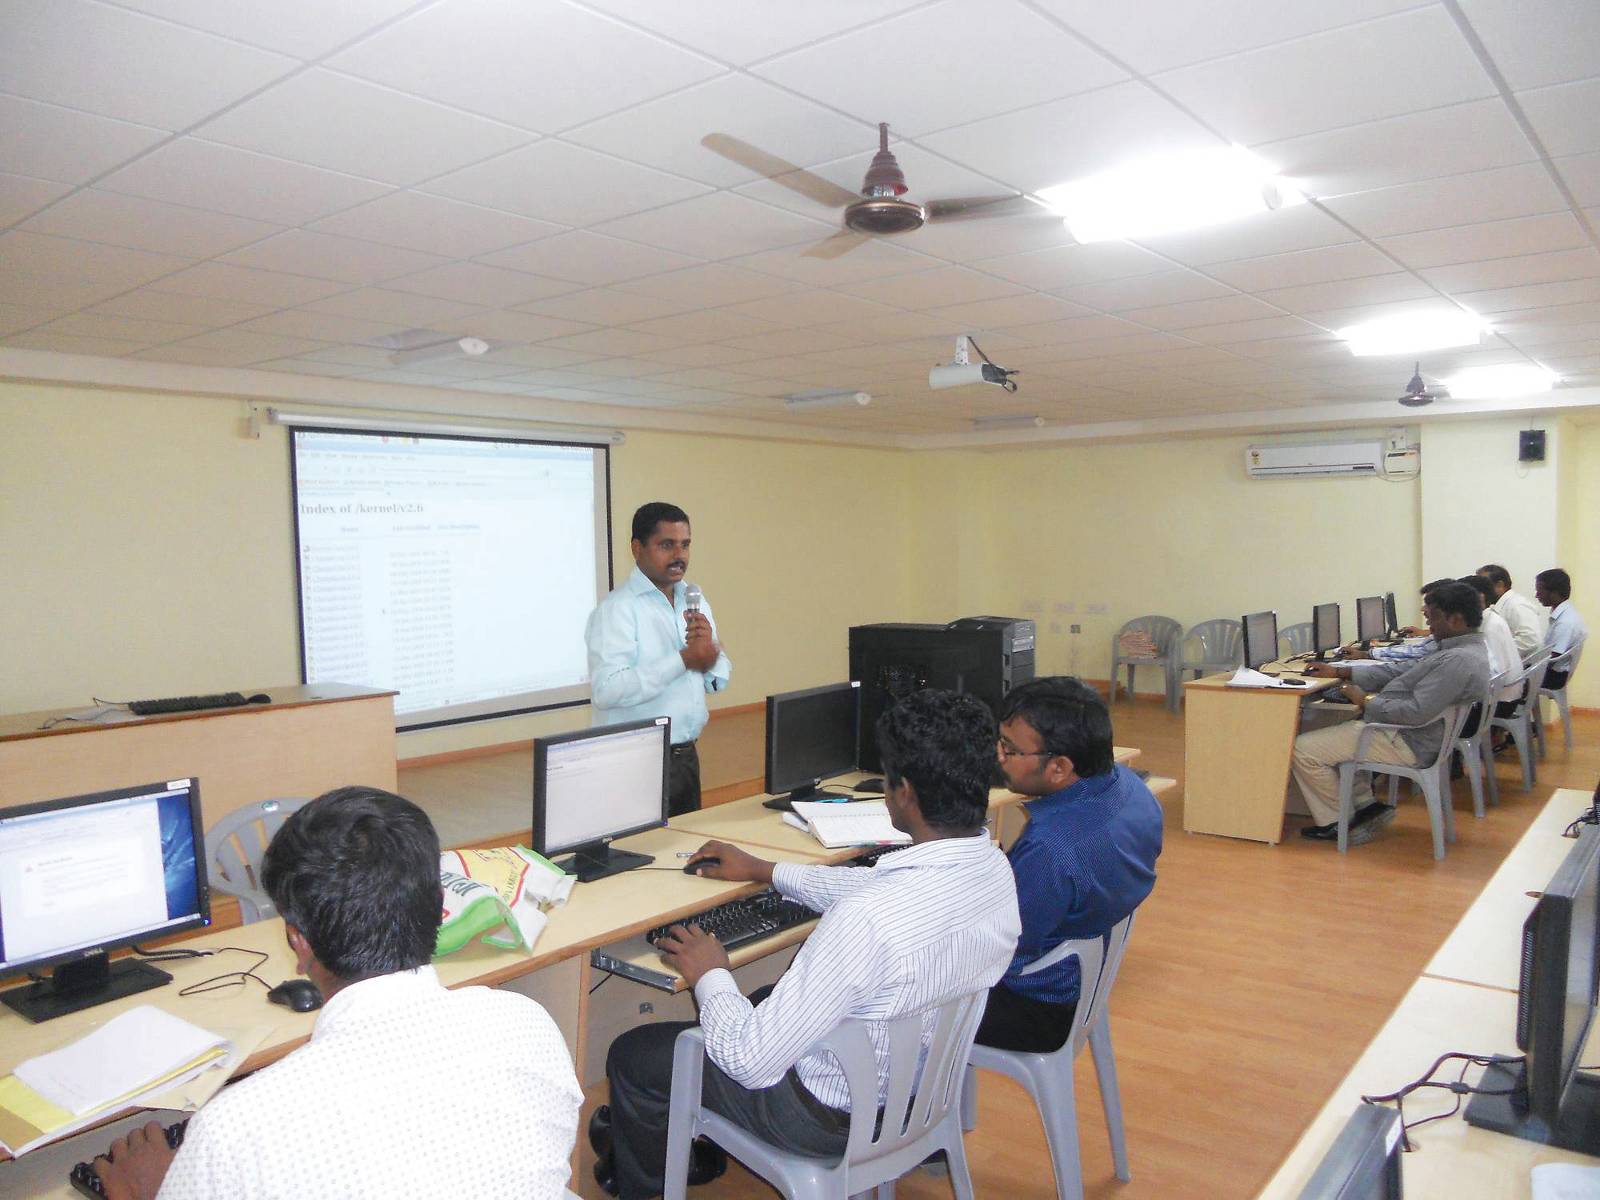 Baskar conducting a workshop at S M K Fomra Institute of Technology, Chennai